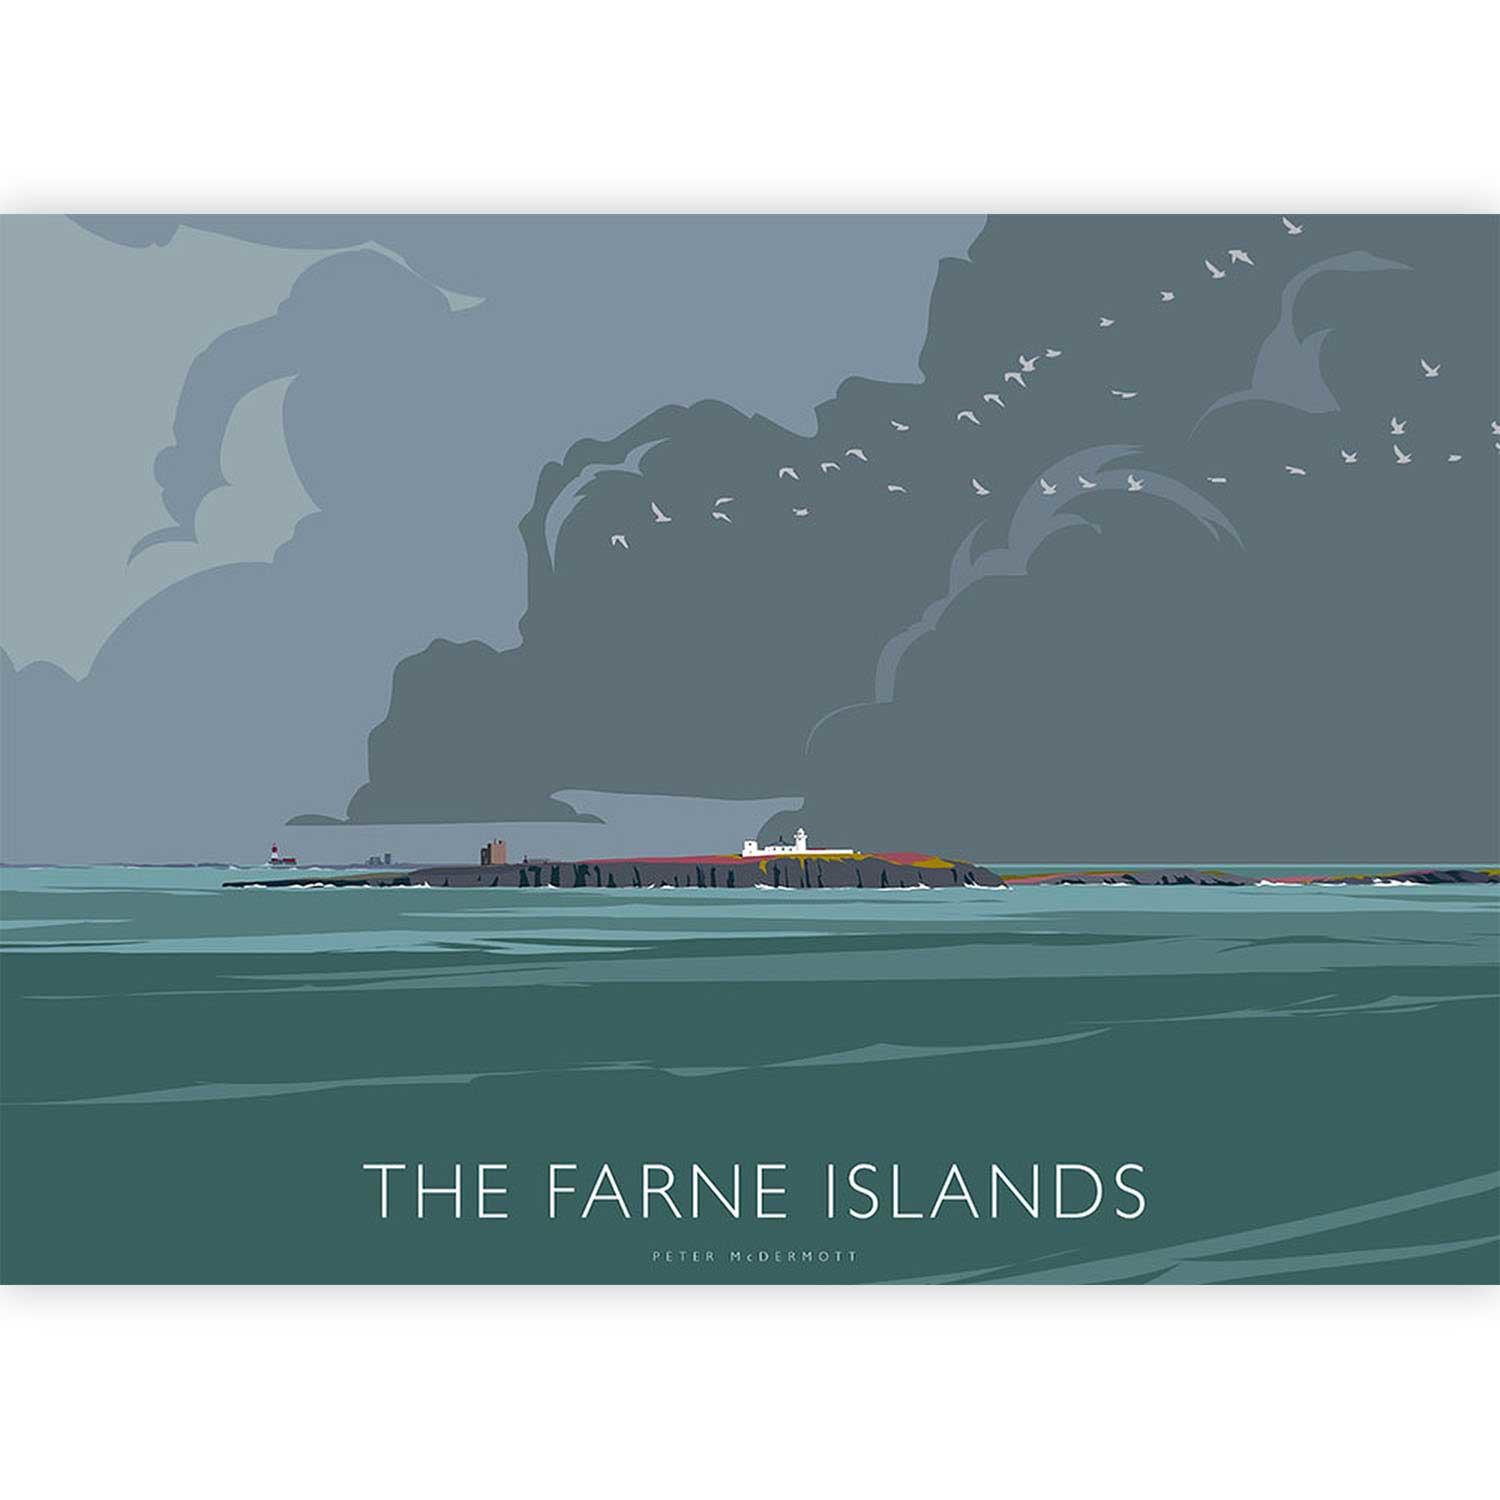 The Farne Islands by Peter McDermott